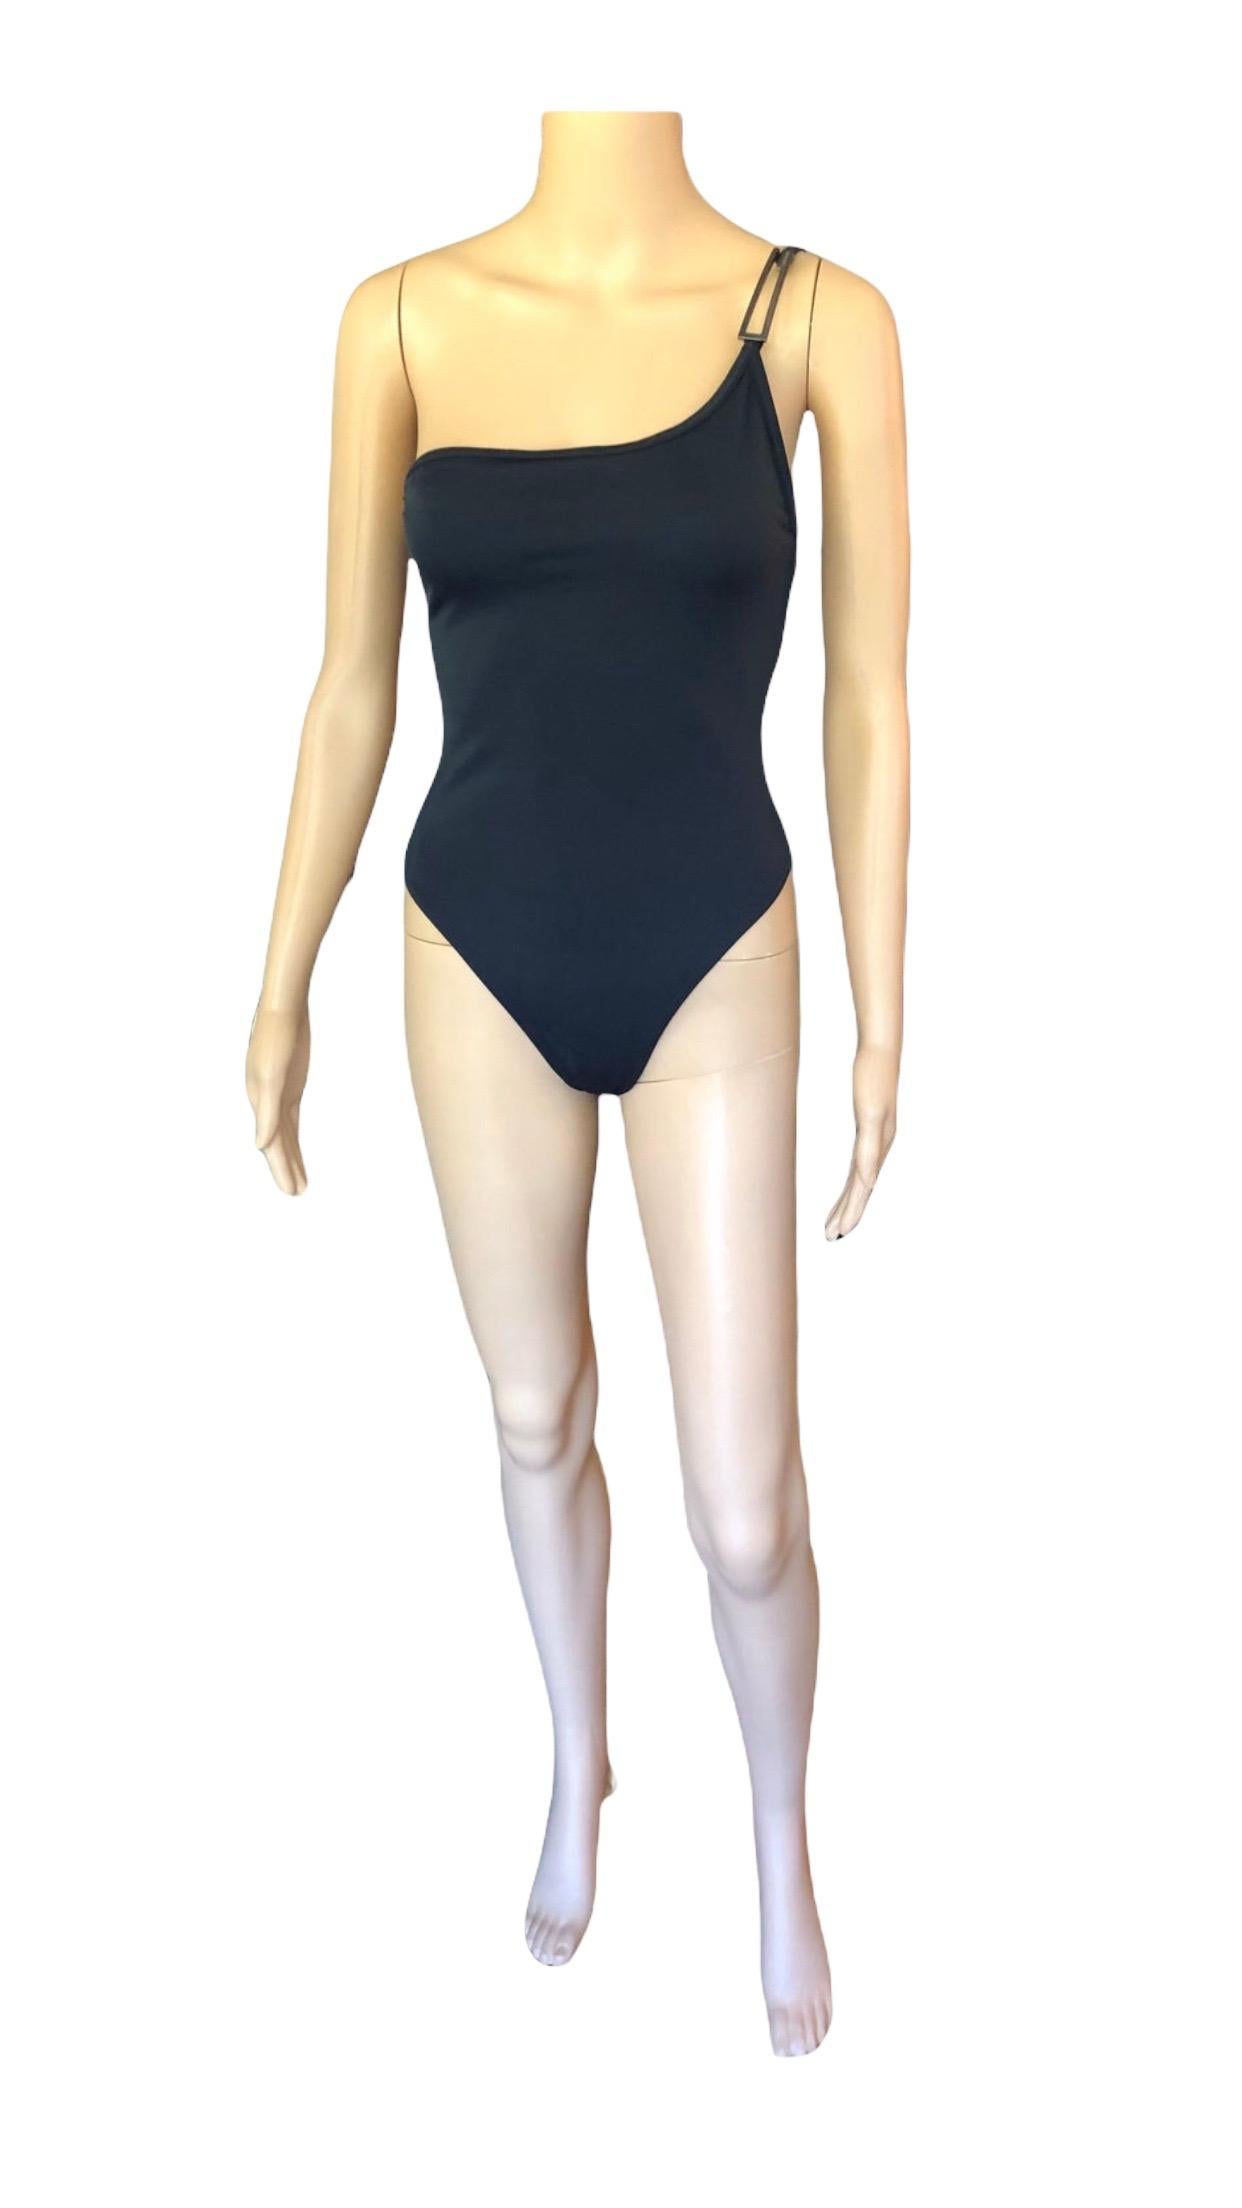 Tom Ford for Gucci S/S 1998 Runway G Logo One Shoulder Black Bodysuit Swimsuit  6